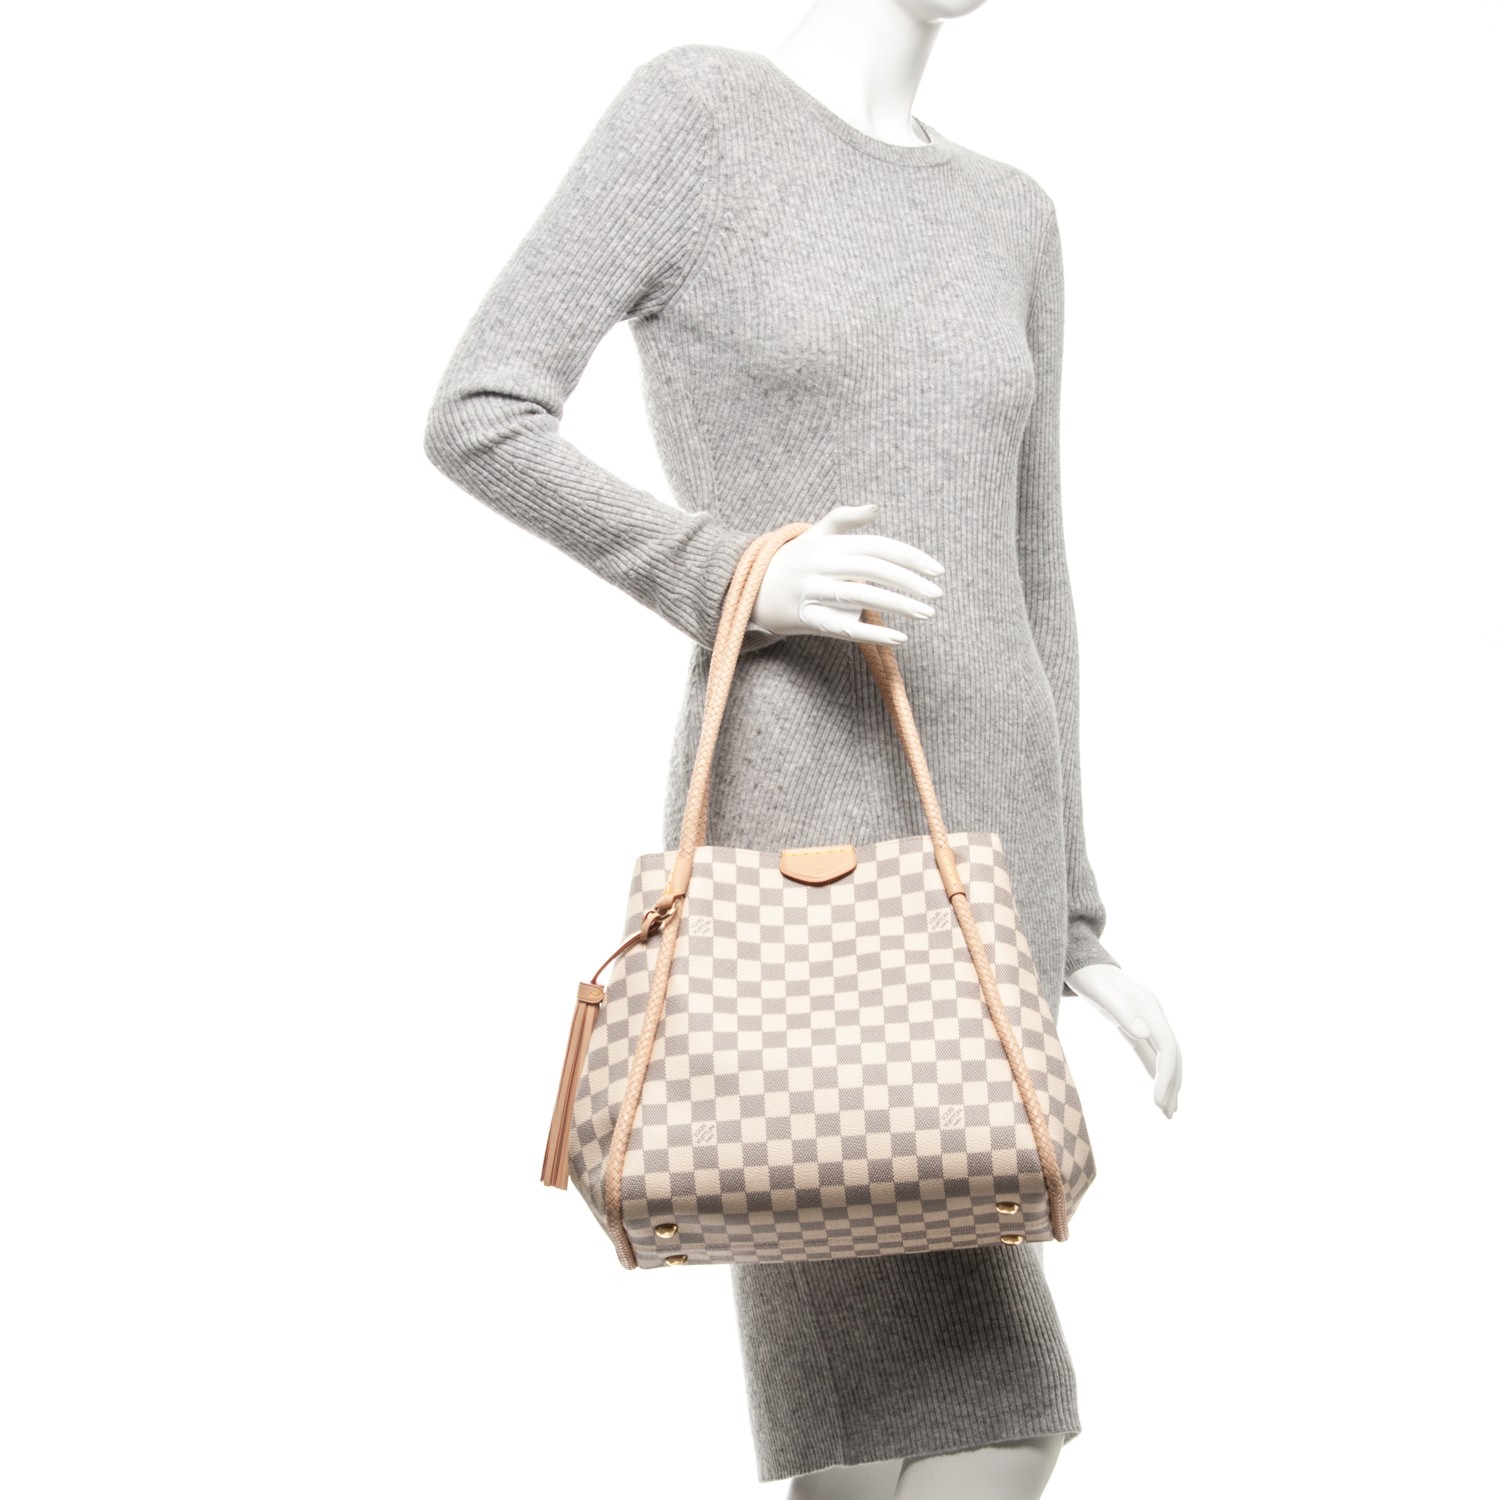 Louis Vuitton, Bags, Louis Vuitton Propriano Discontinued